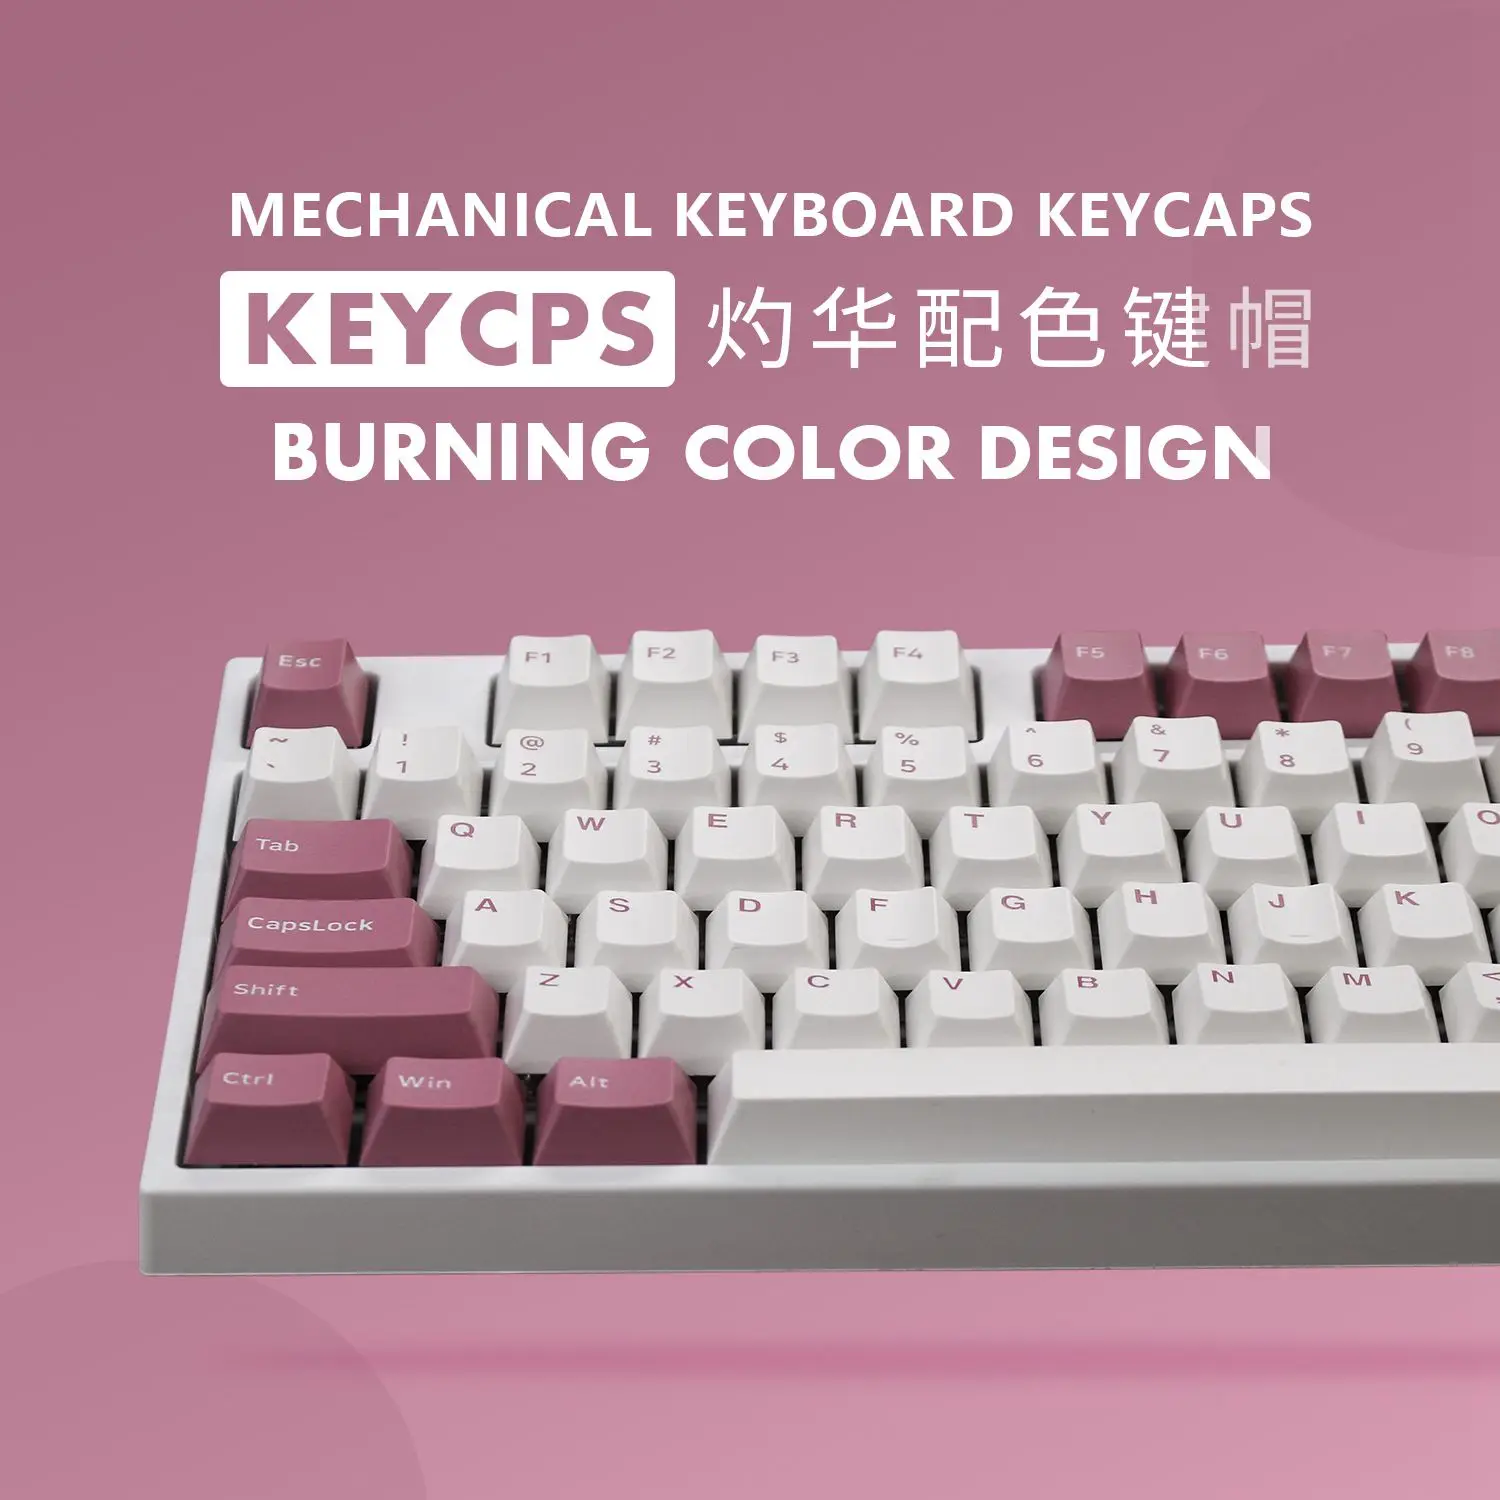 108+52 Keys PBT Double-shot keycap Cherry Profile Mechanical Keyboard burning color design theme Keycap  Filco Ducky